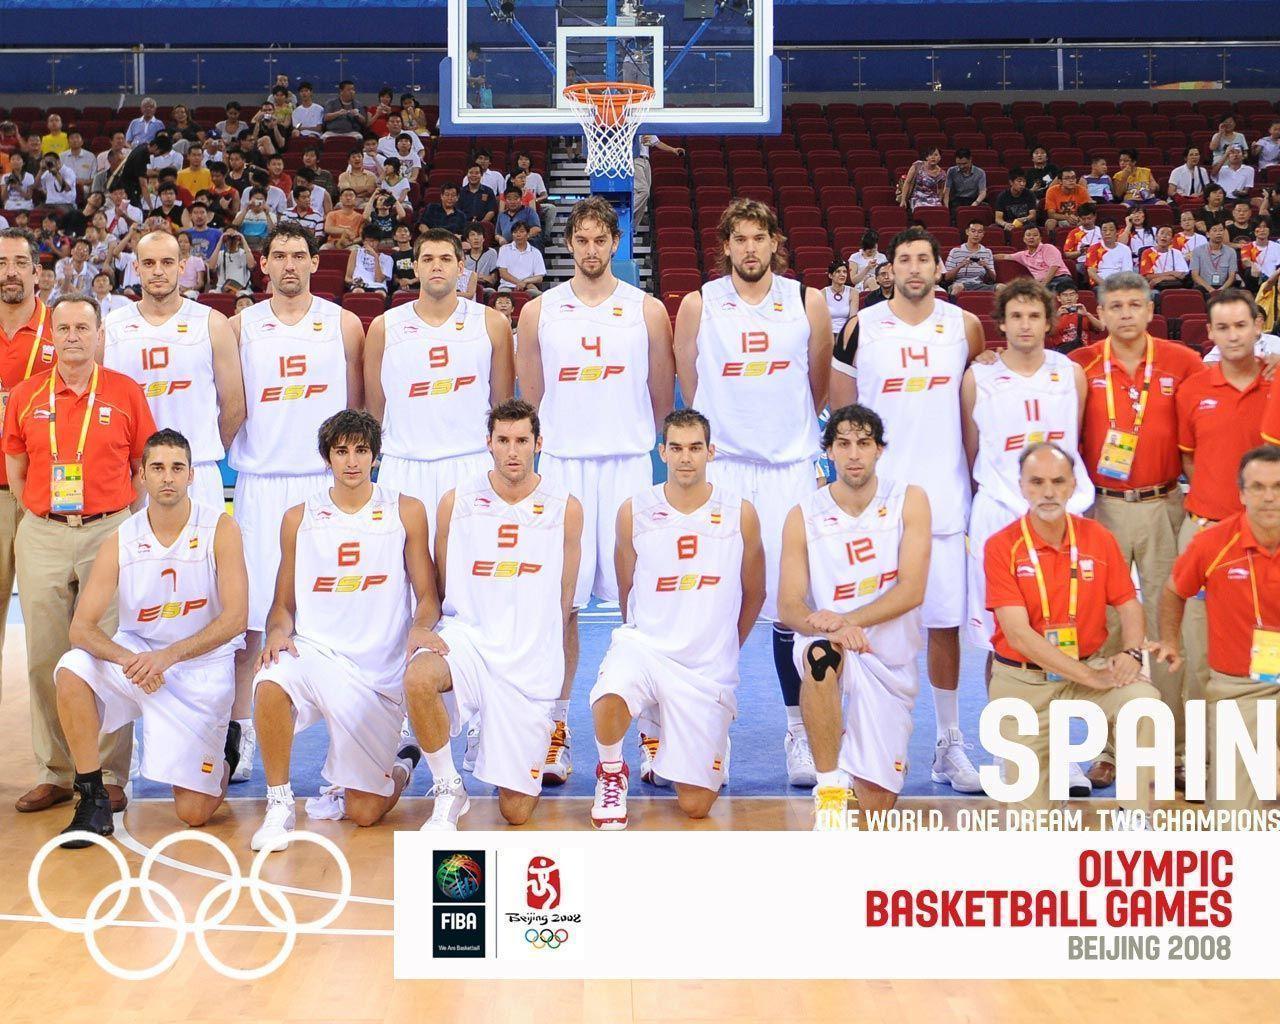 Spain National Team Wallpaper 2015